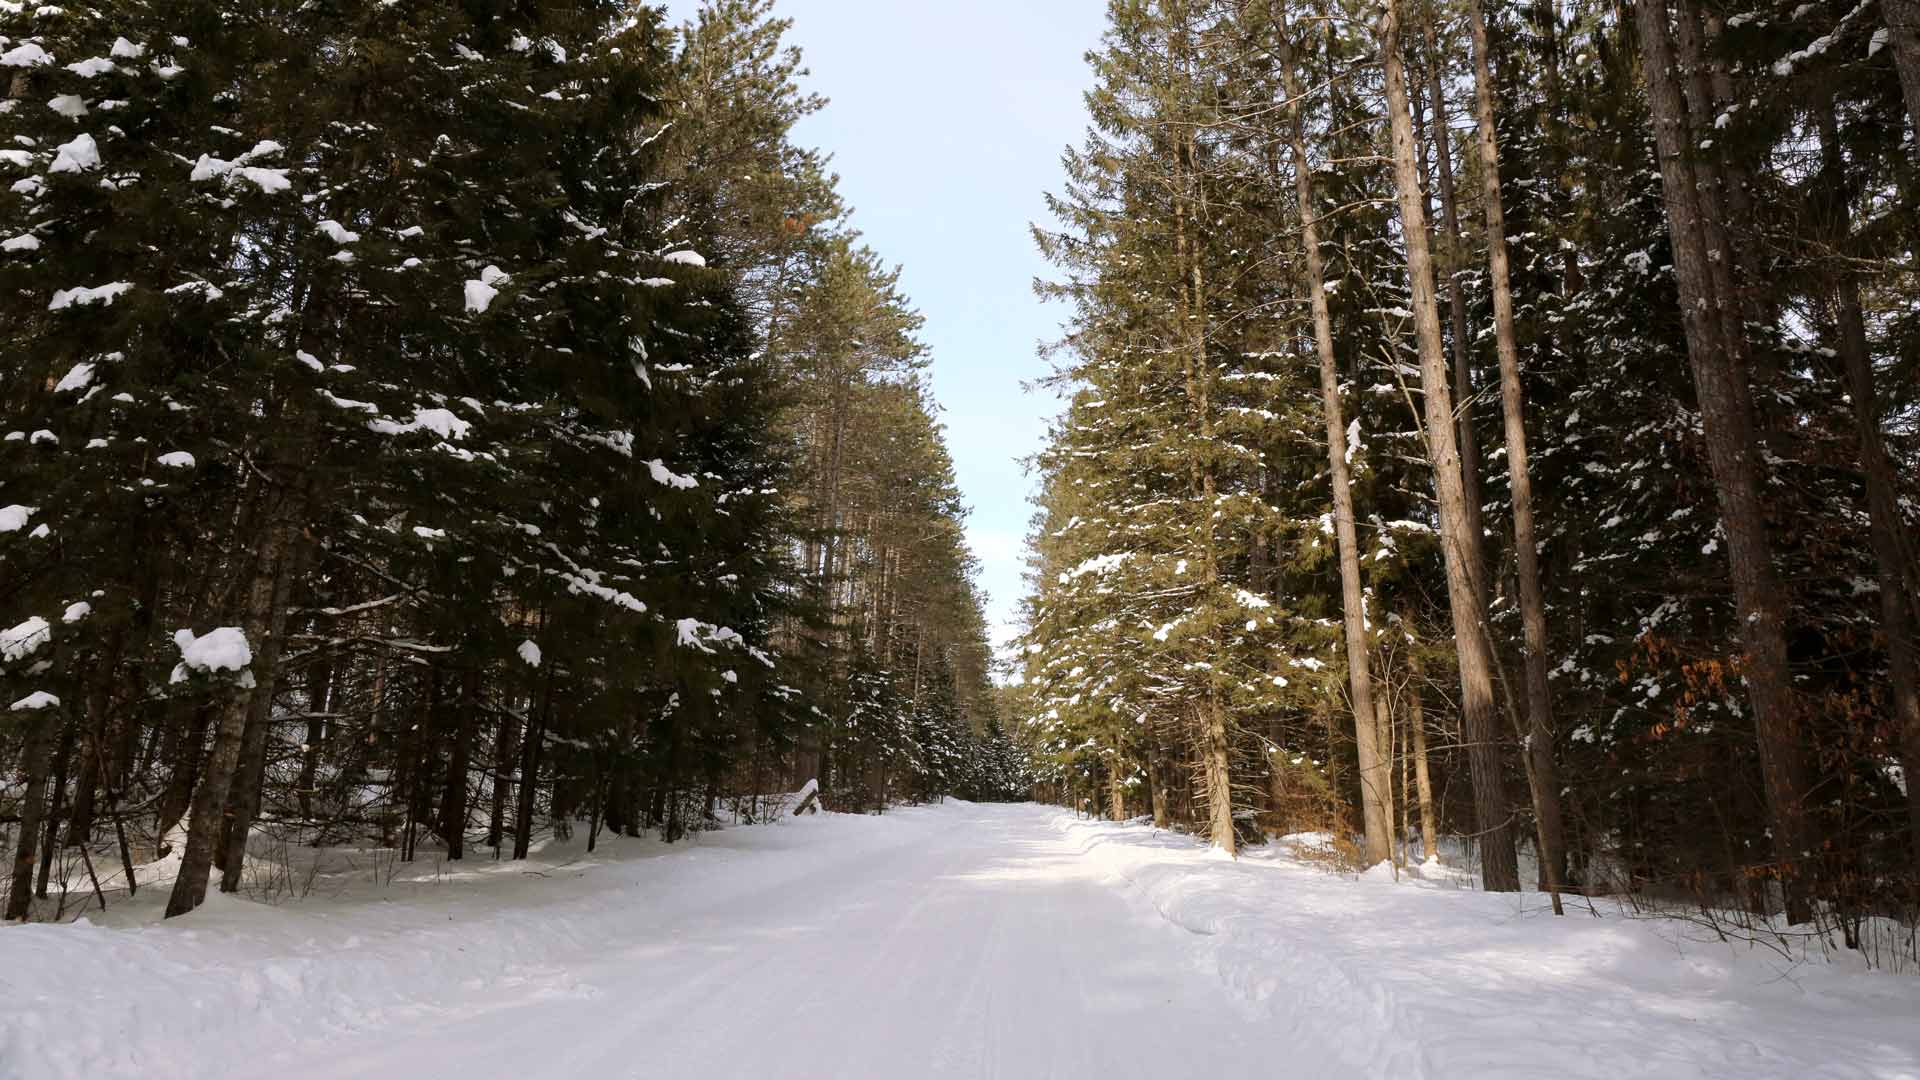 snowy Phelps road in Vilas County, WI